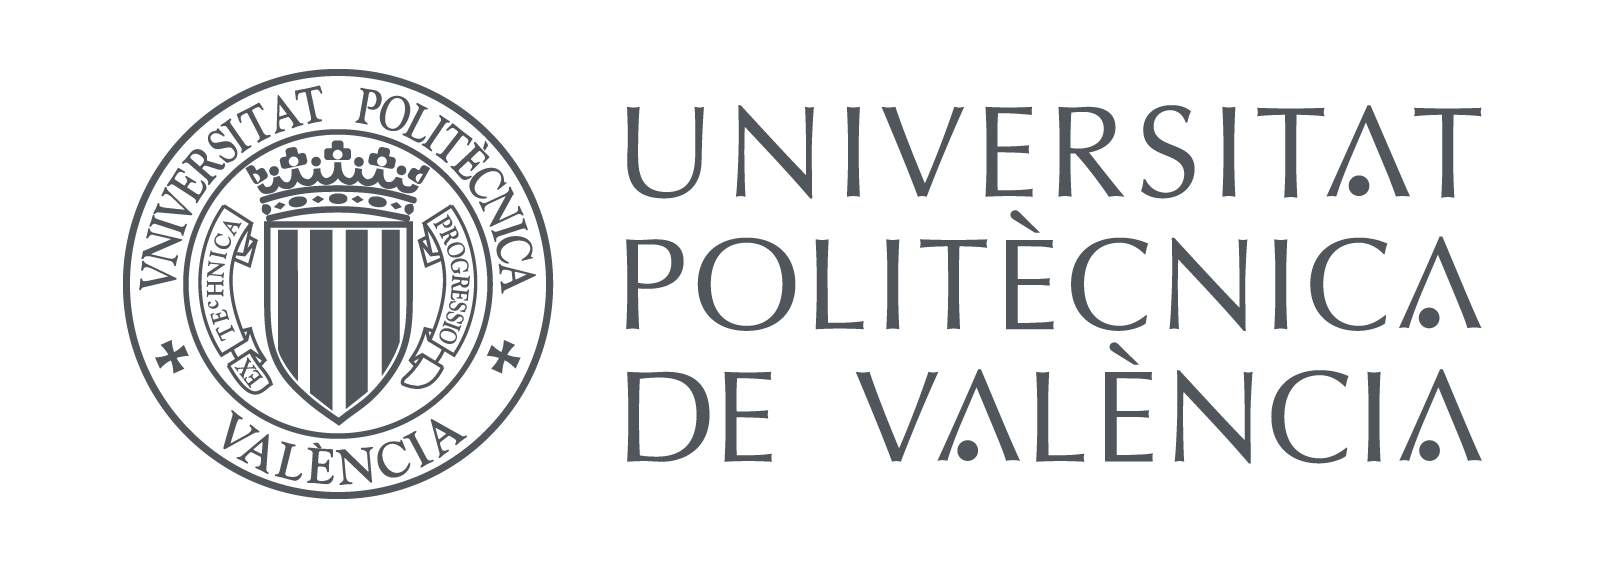 Universitat Politécnica de Valéncia